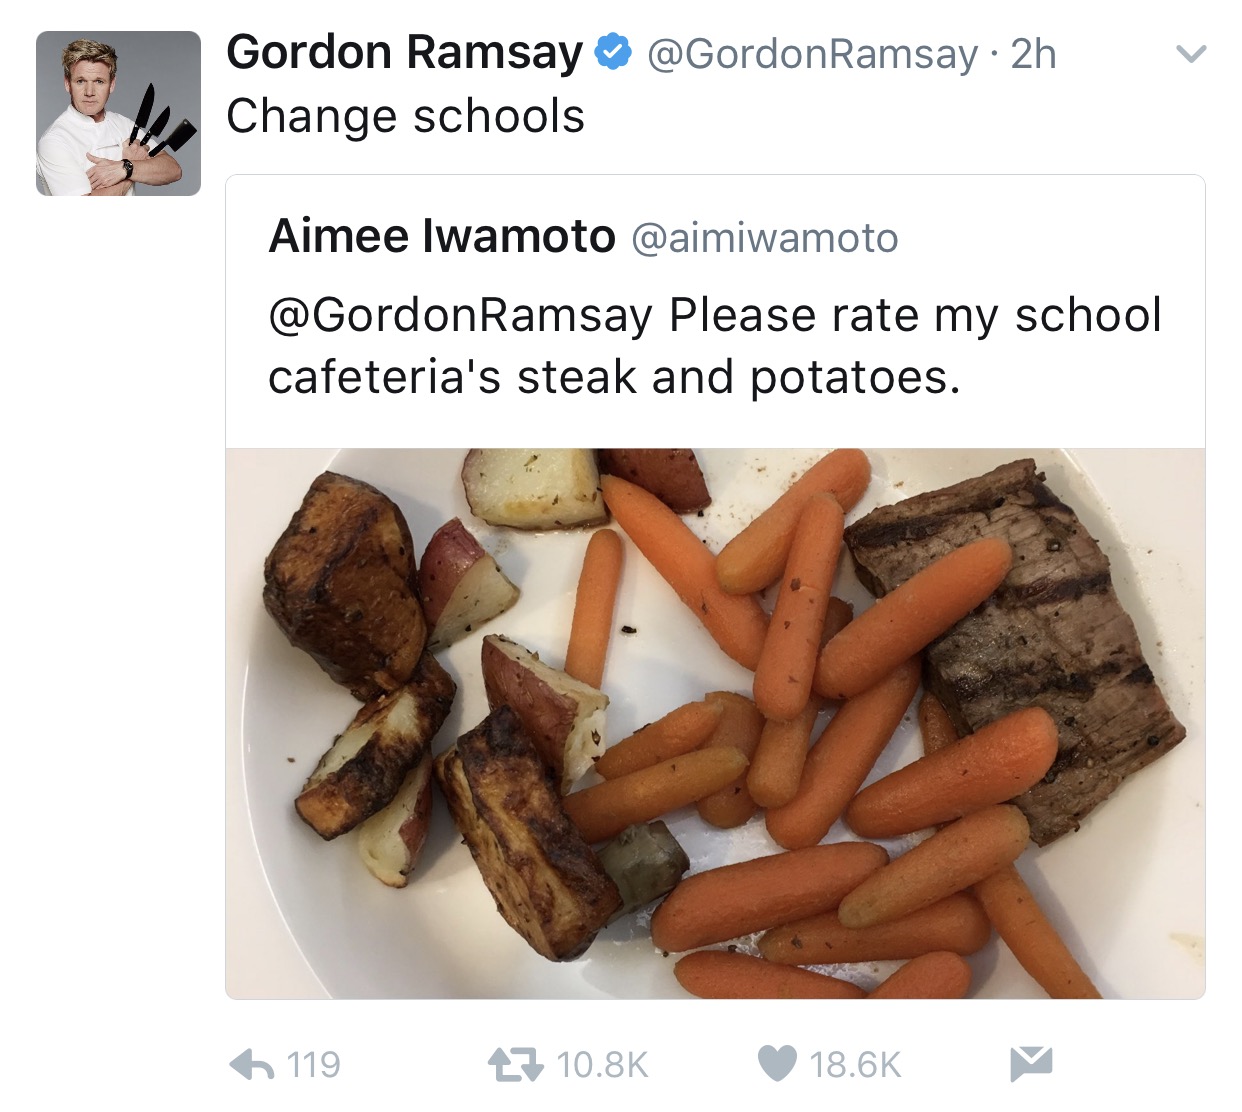 tweet - gordon ramsay change schools - Ramsay 2h Gordon Ramsay Change schools Aimee Iwamoto Ramsay Please rate my school cafeteria's steak and potatoes. 6 119 27 7